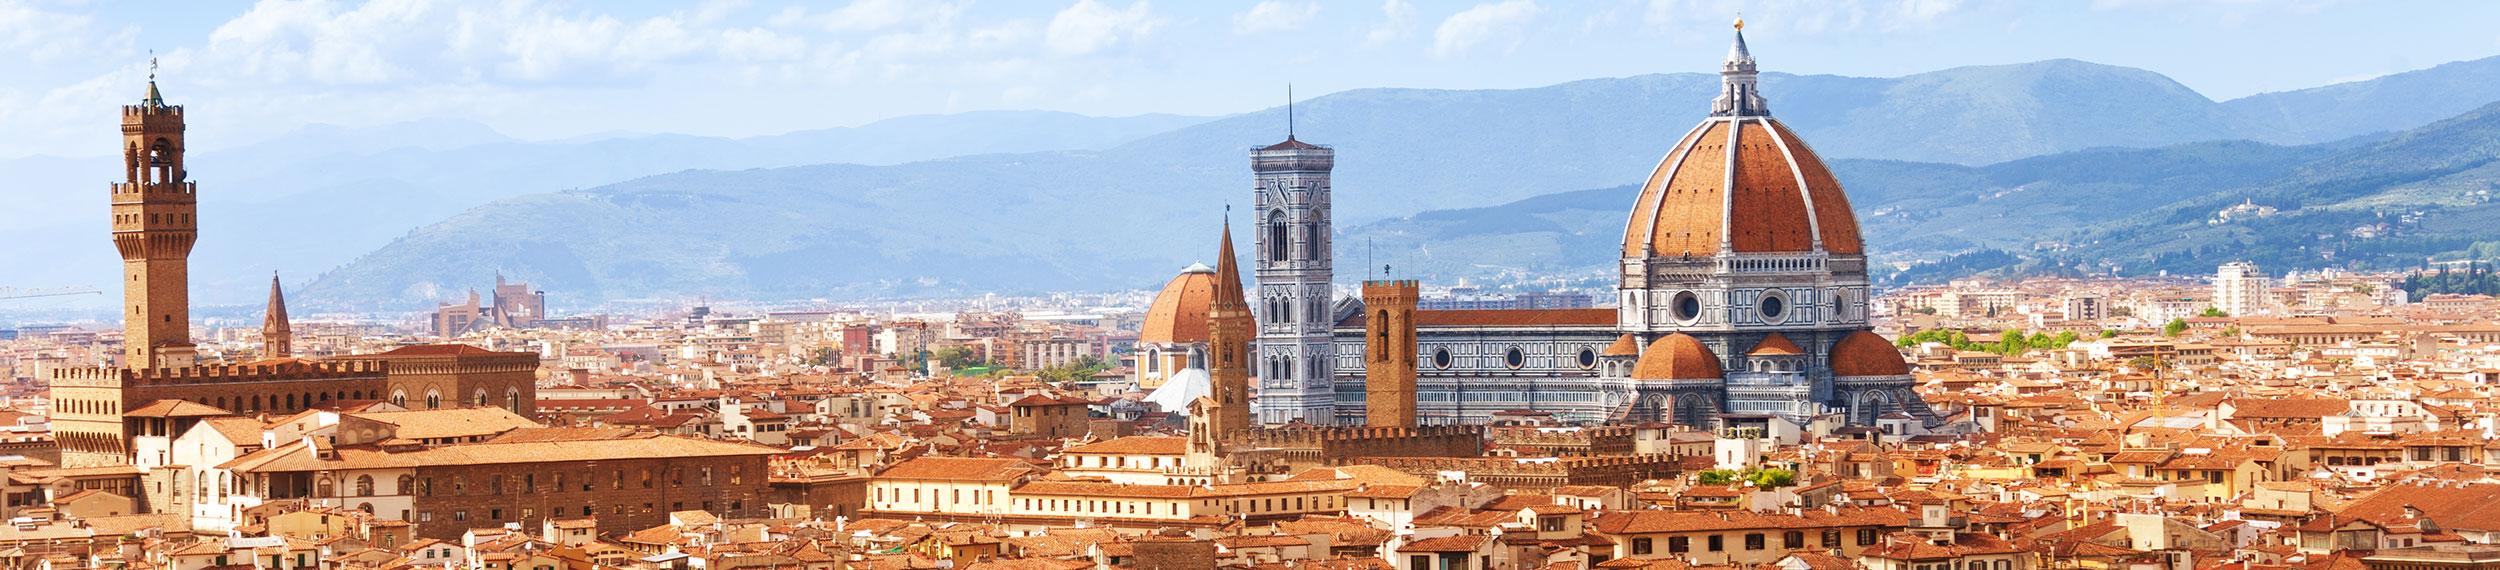 Florence cityscape with a view of Palazzo Vecchio, Cathedral of Santa Maria de Fiore, and Arno River.